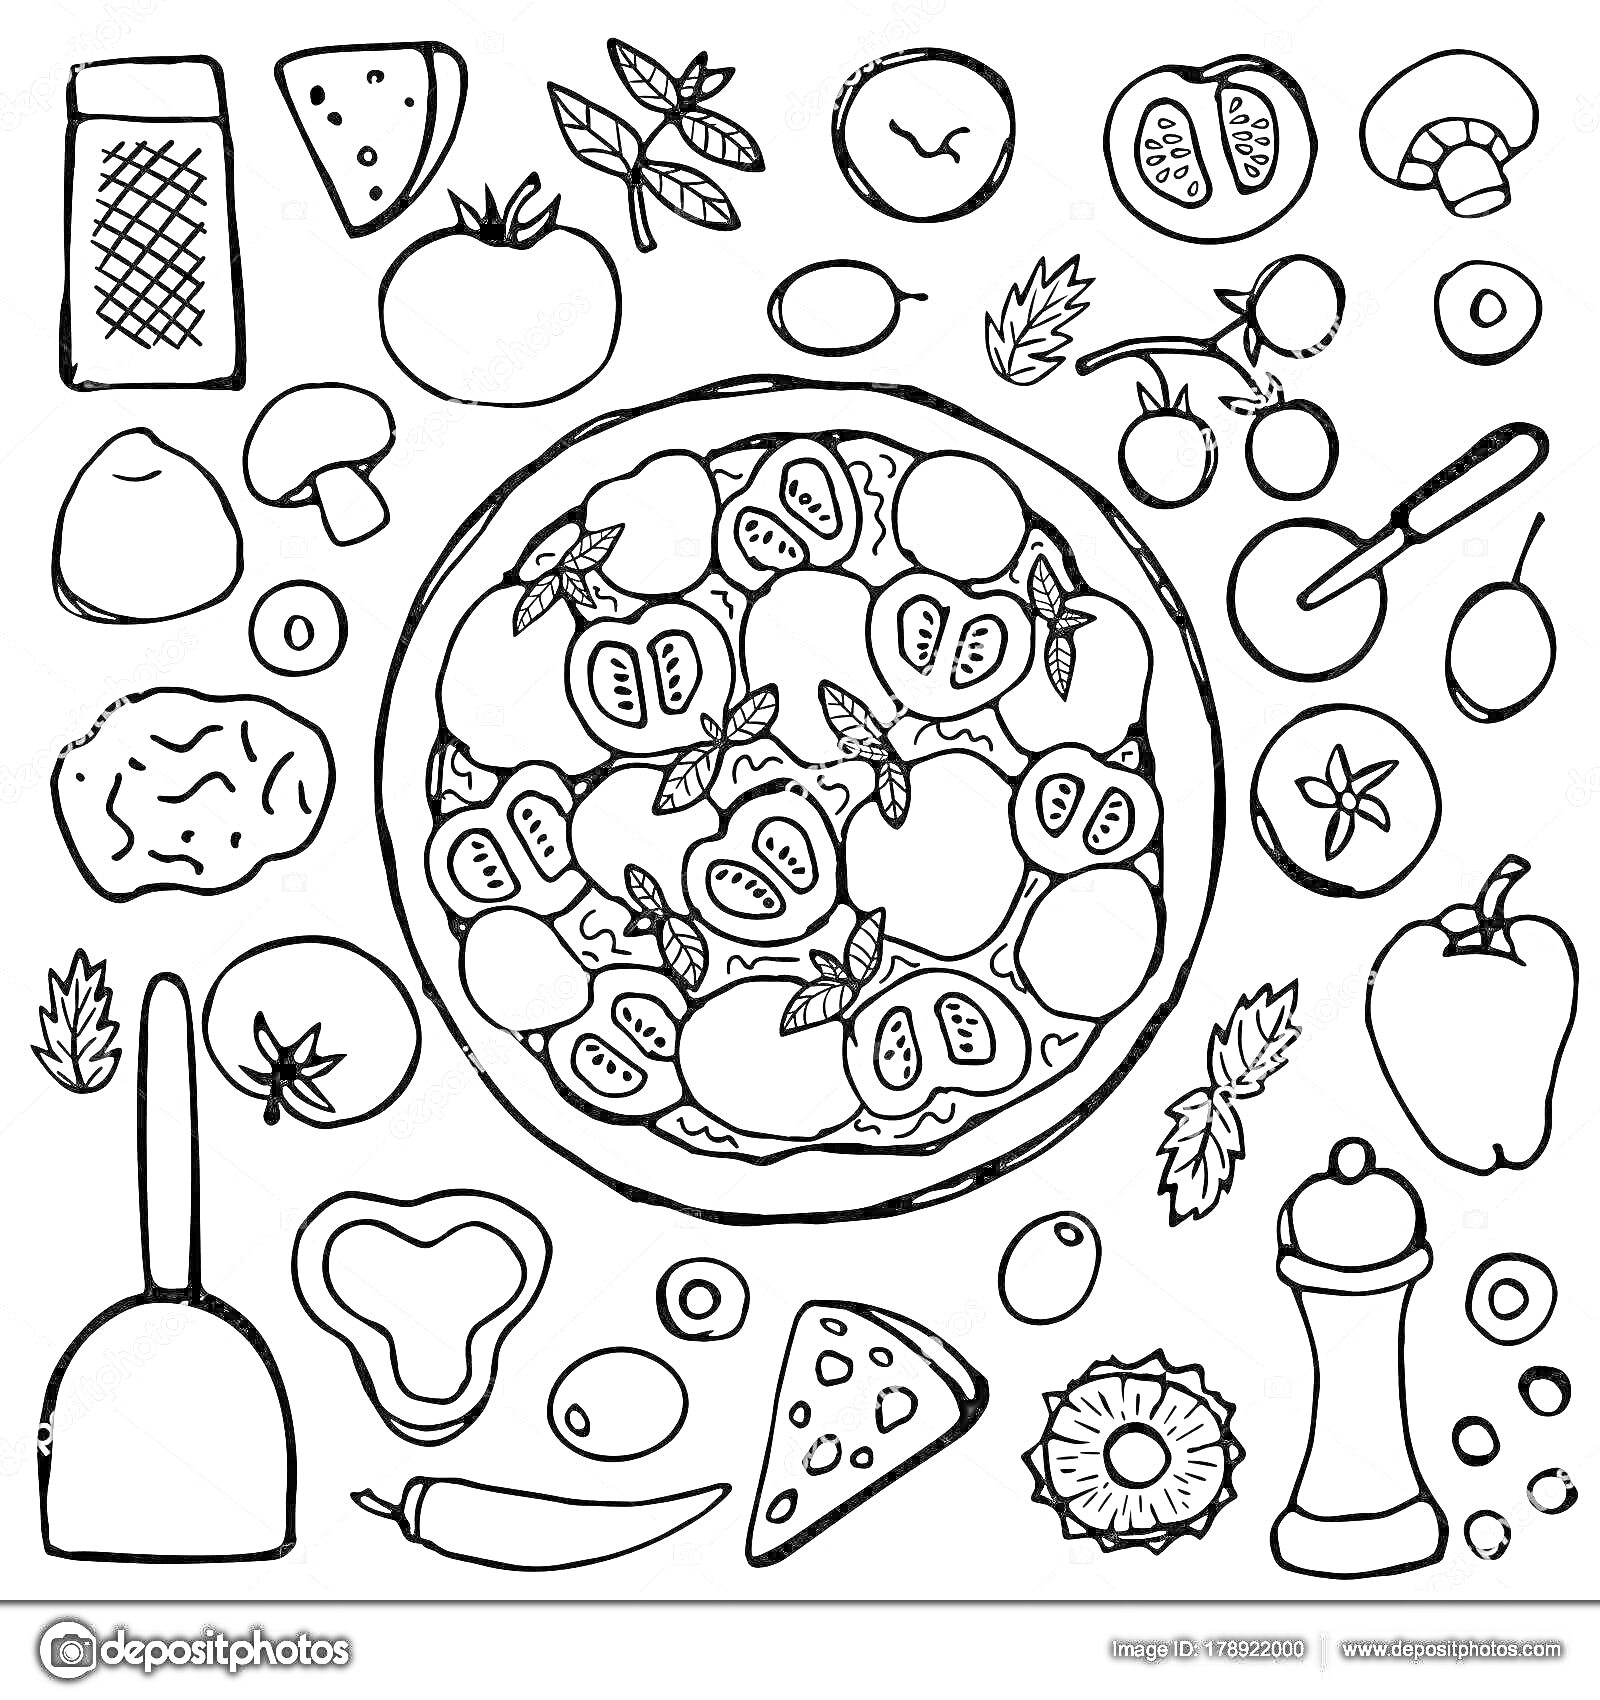 Раскраска Еда и ингредиенты с пиццей в центре